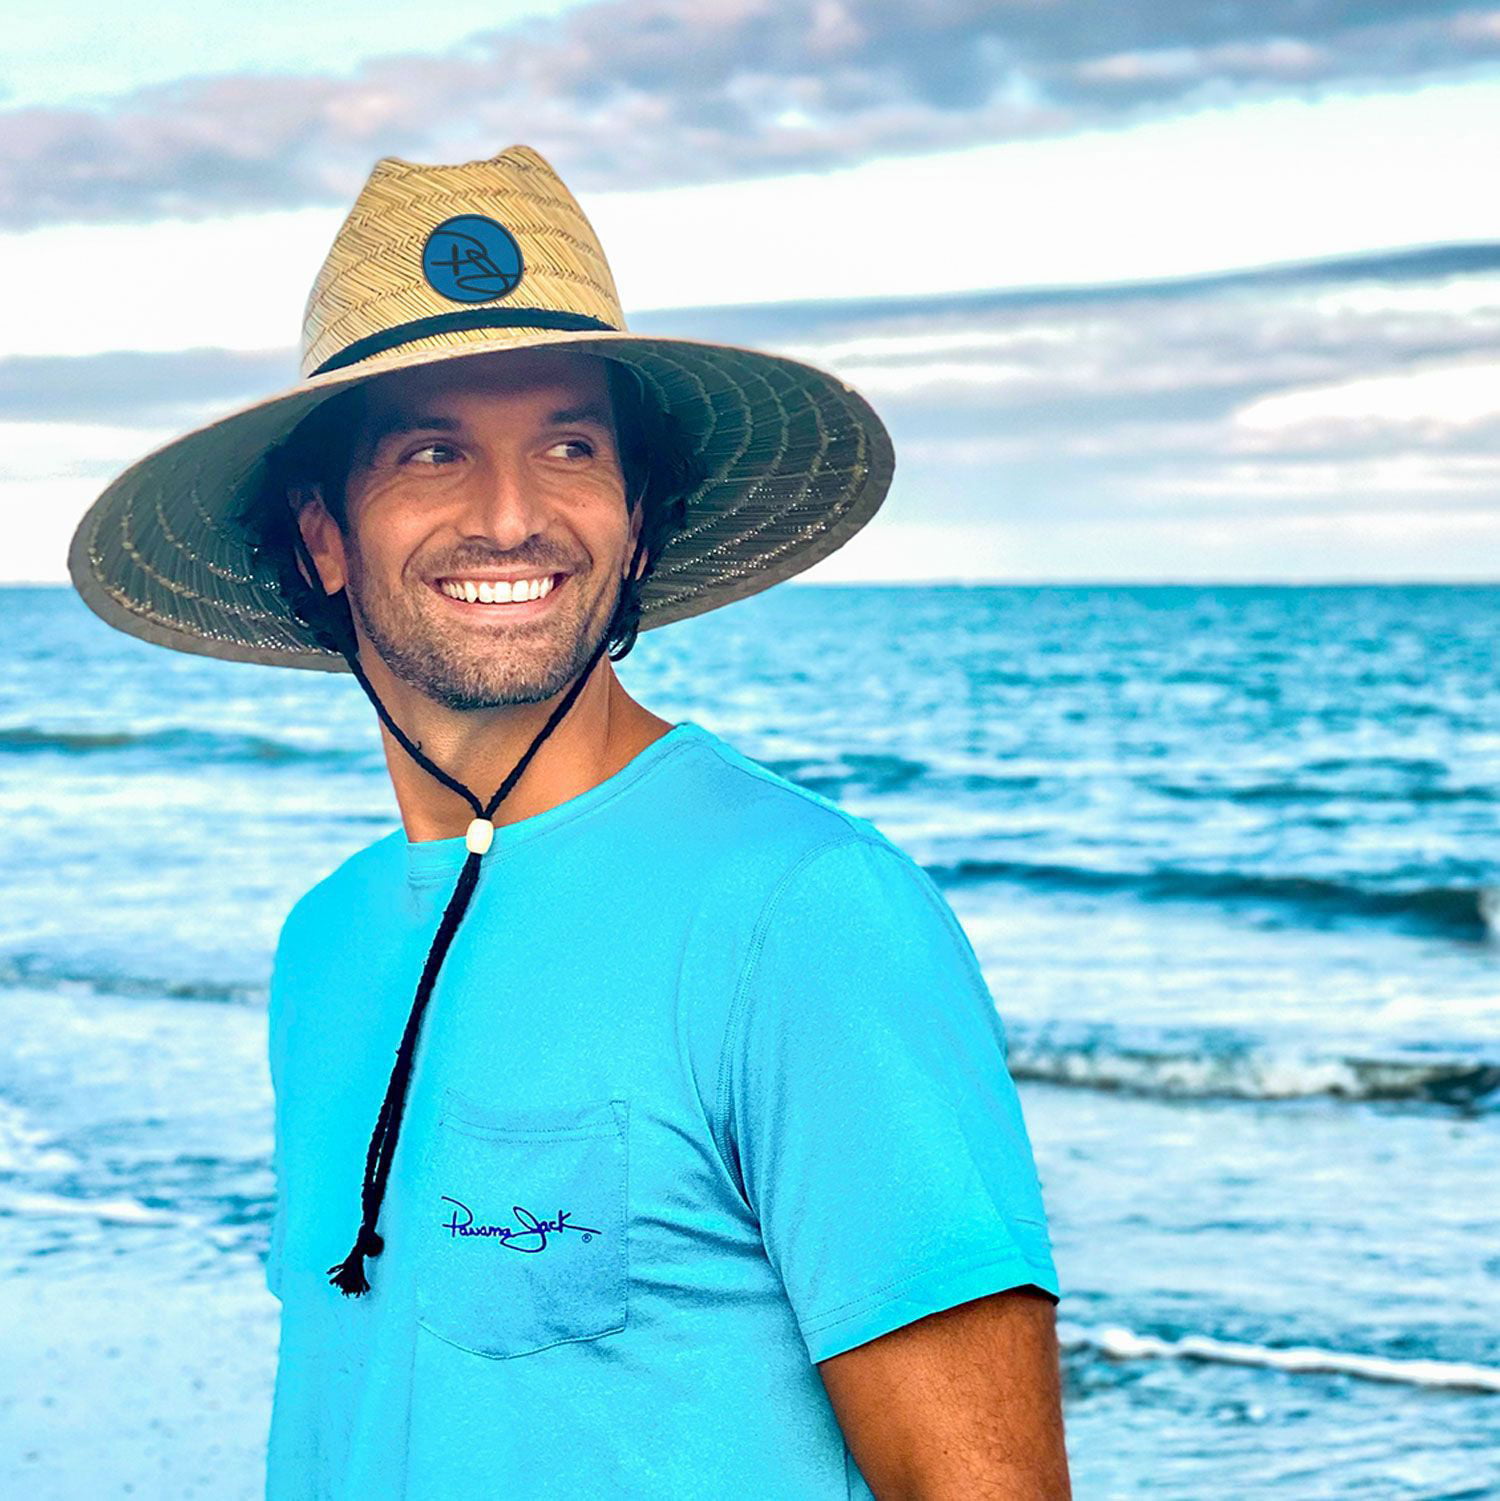 Panama Jack Rush Straw Lifeguard Sun Hat, 4 Bound Big Brim, Chin Cord and  Toggle with Logo Patch (Brown, Large/X-Large)